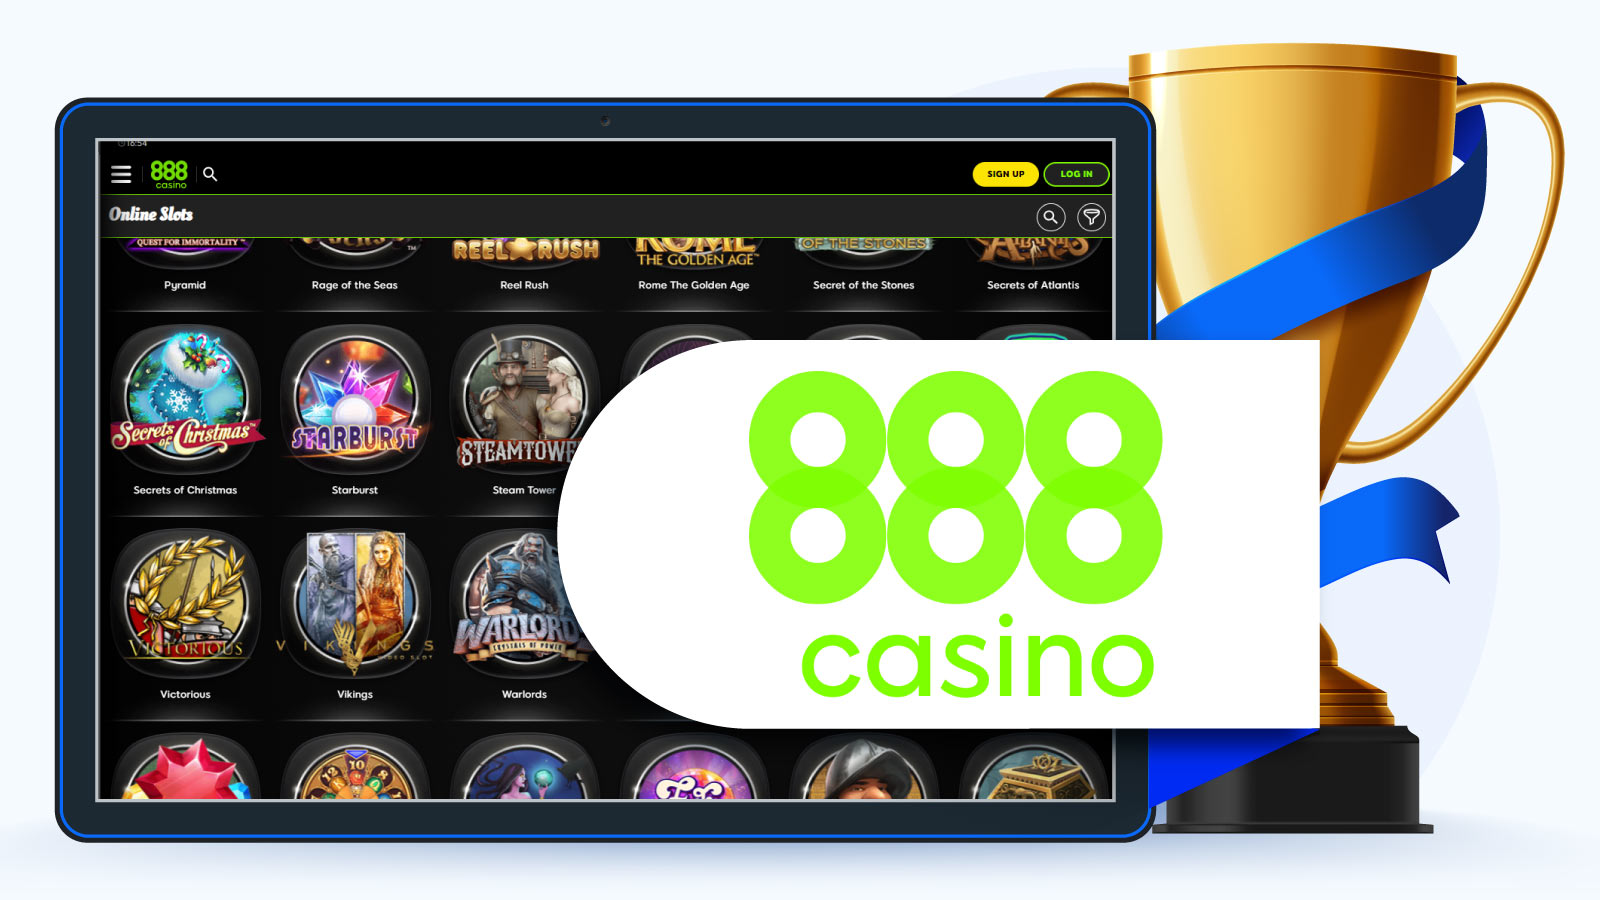 888 Casino slot games slection - Best Casino for Starburst No Deposit Free Spins Bonus